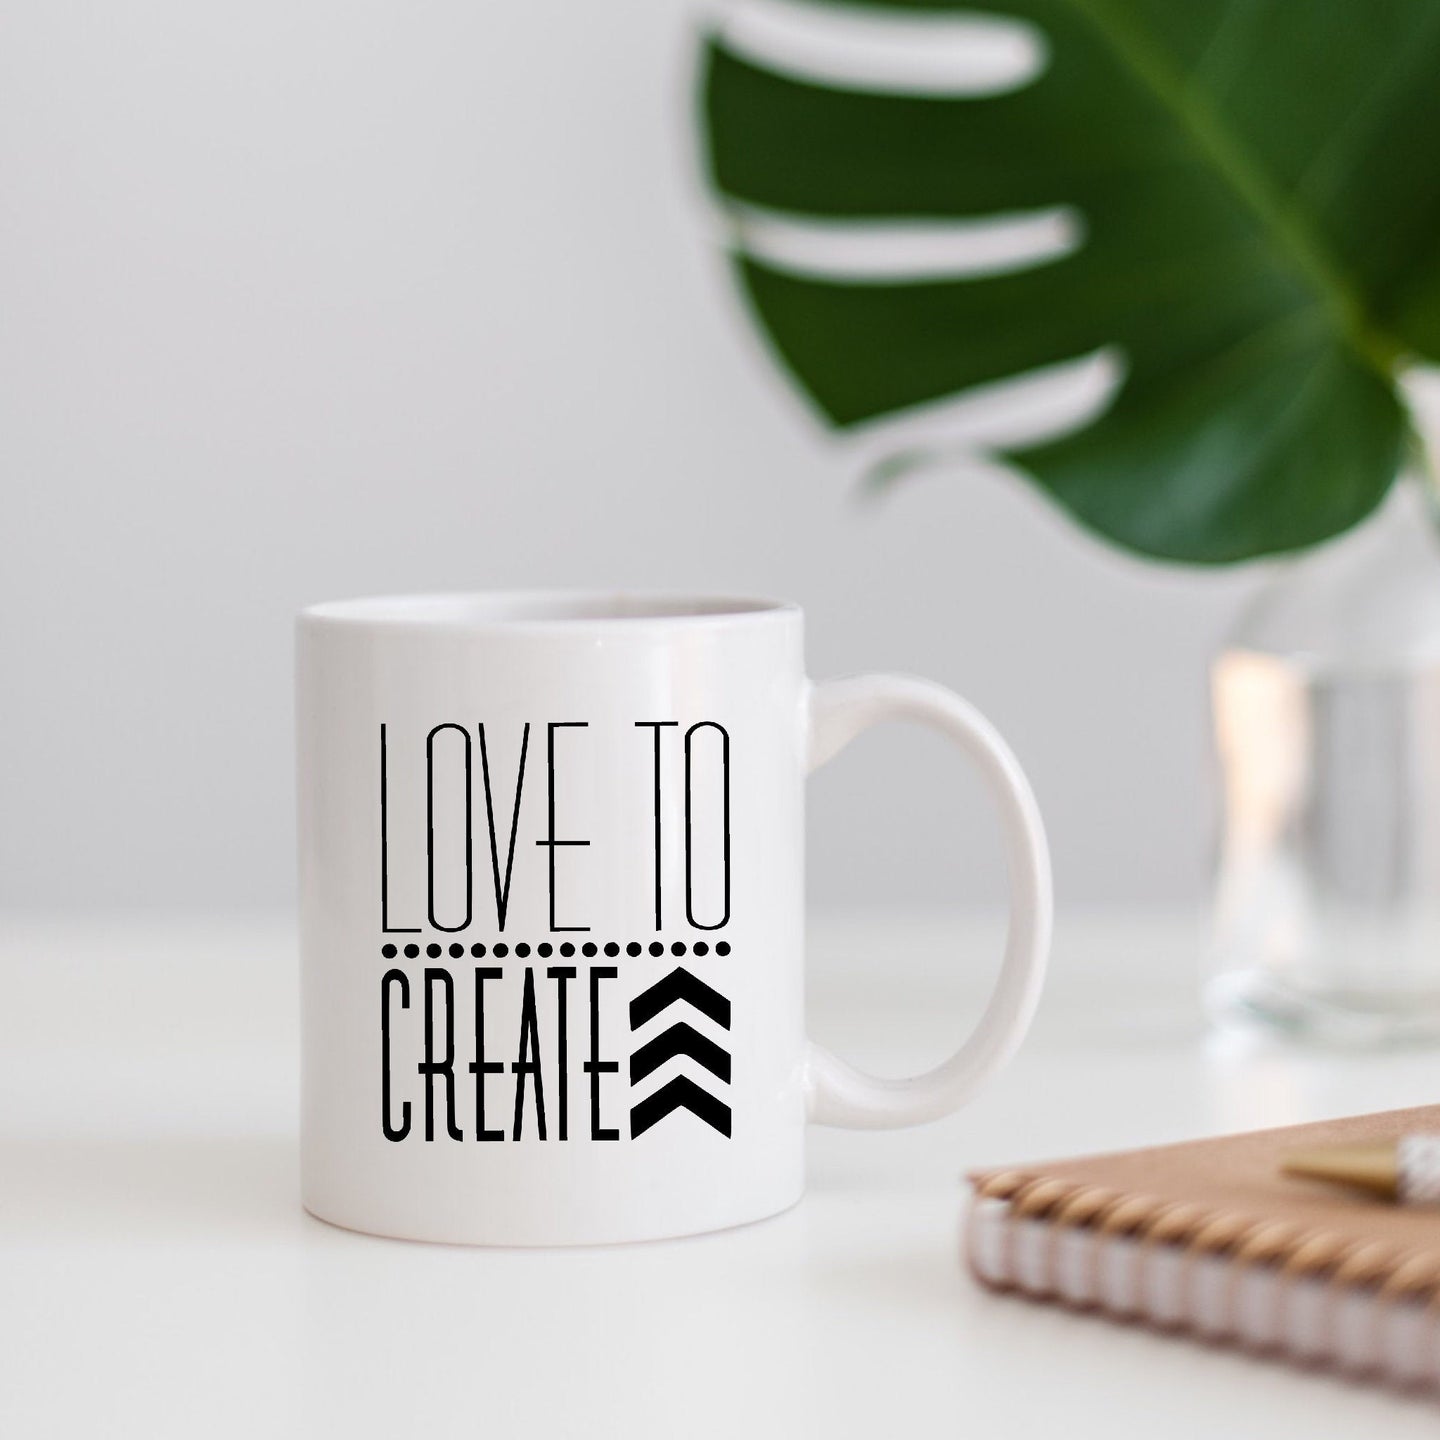 Love to Create